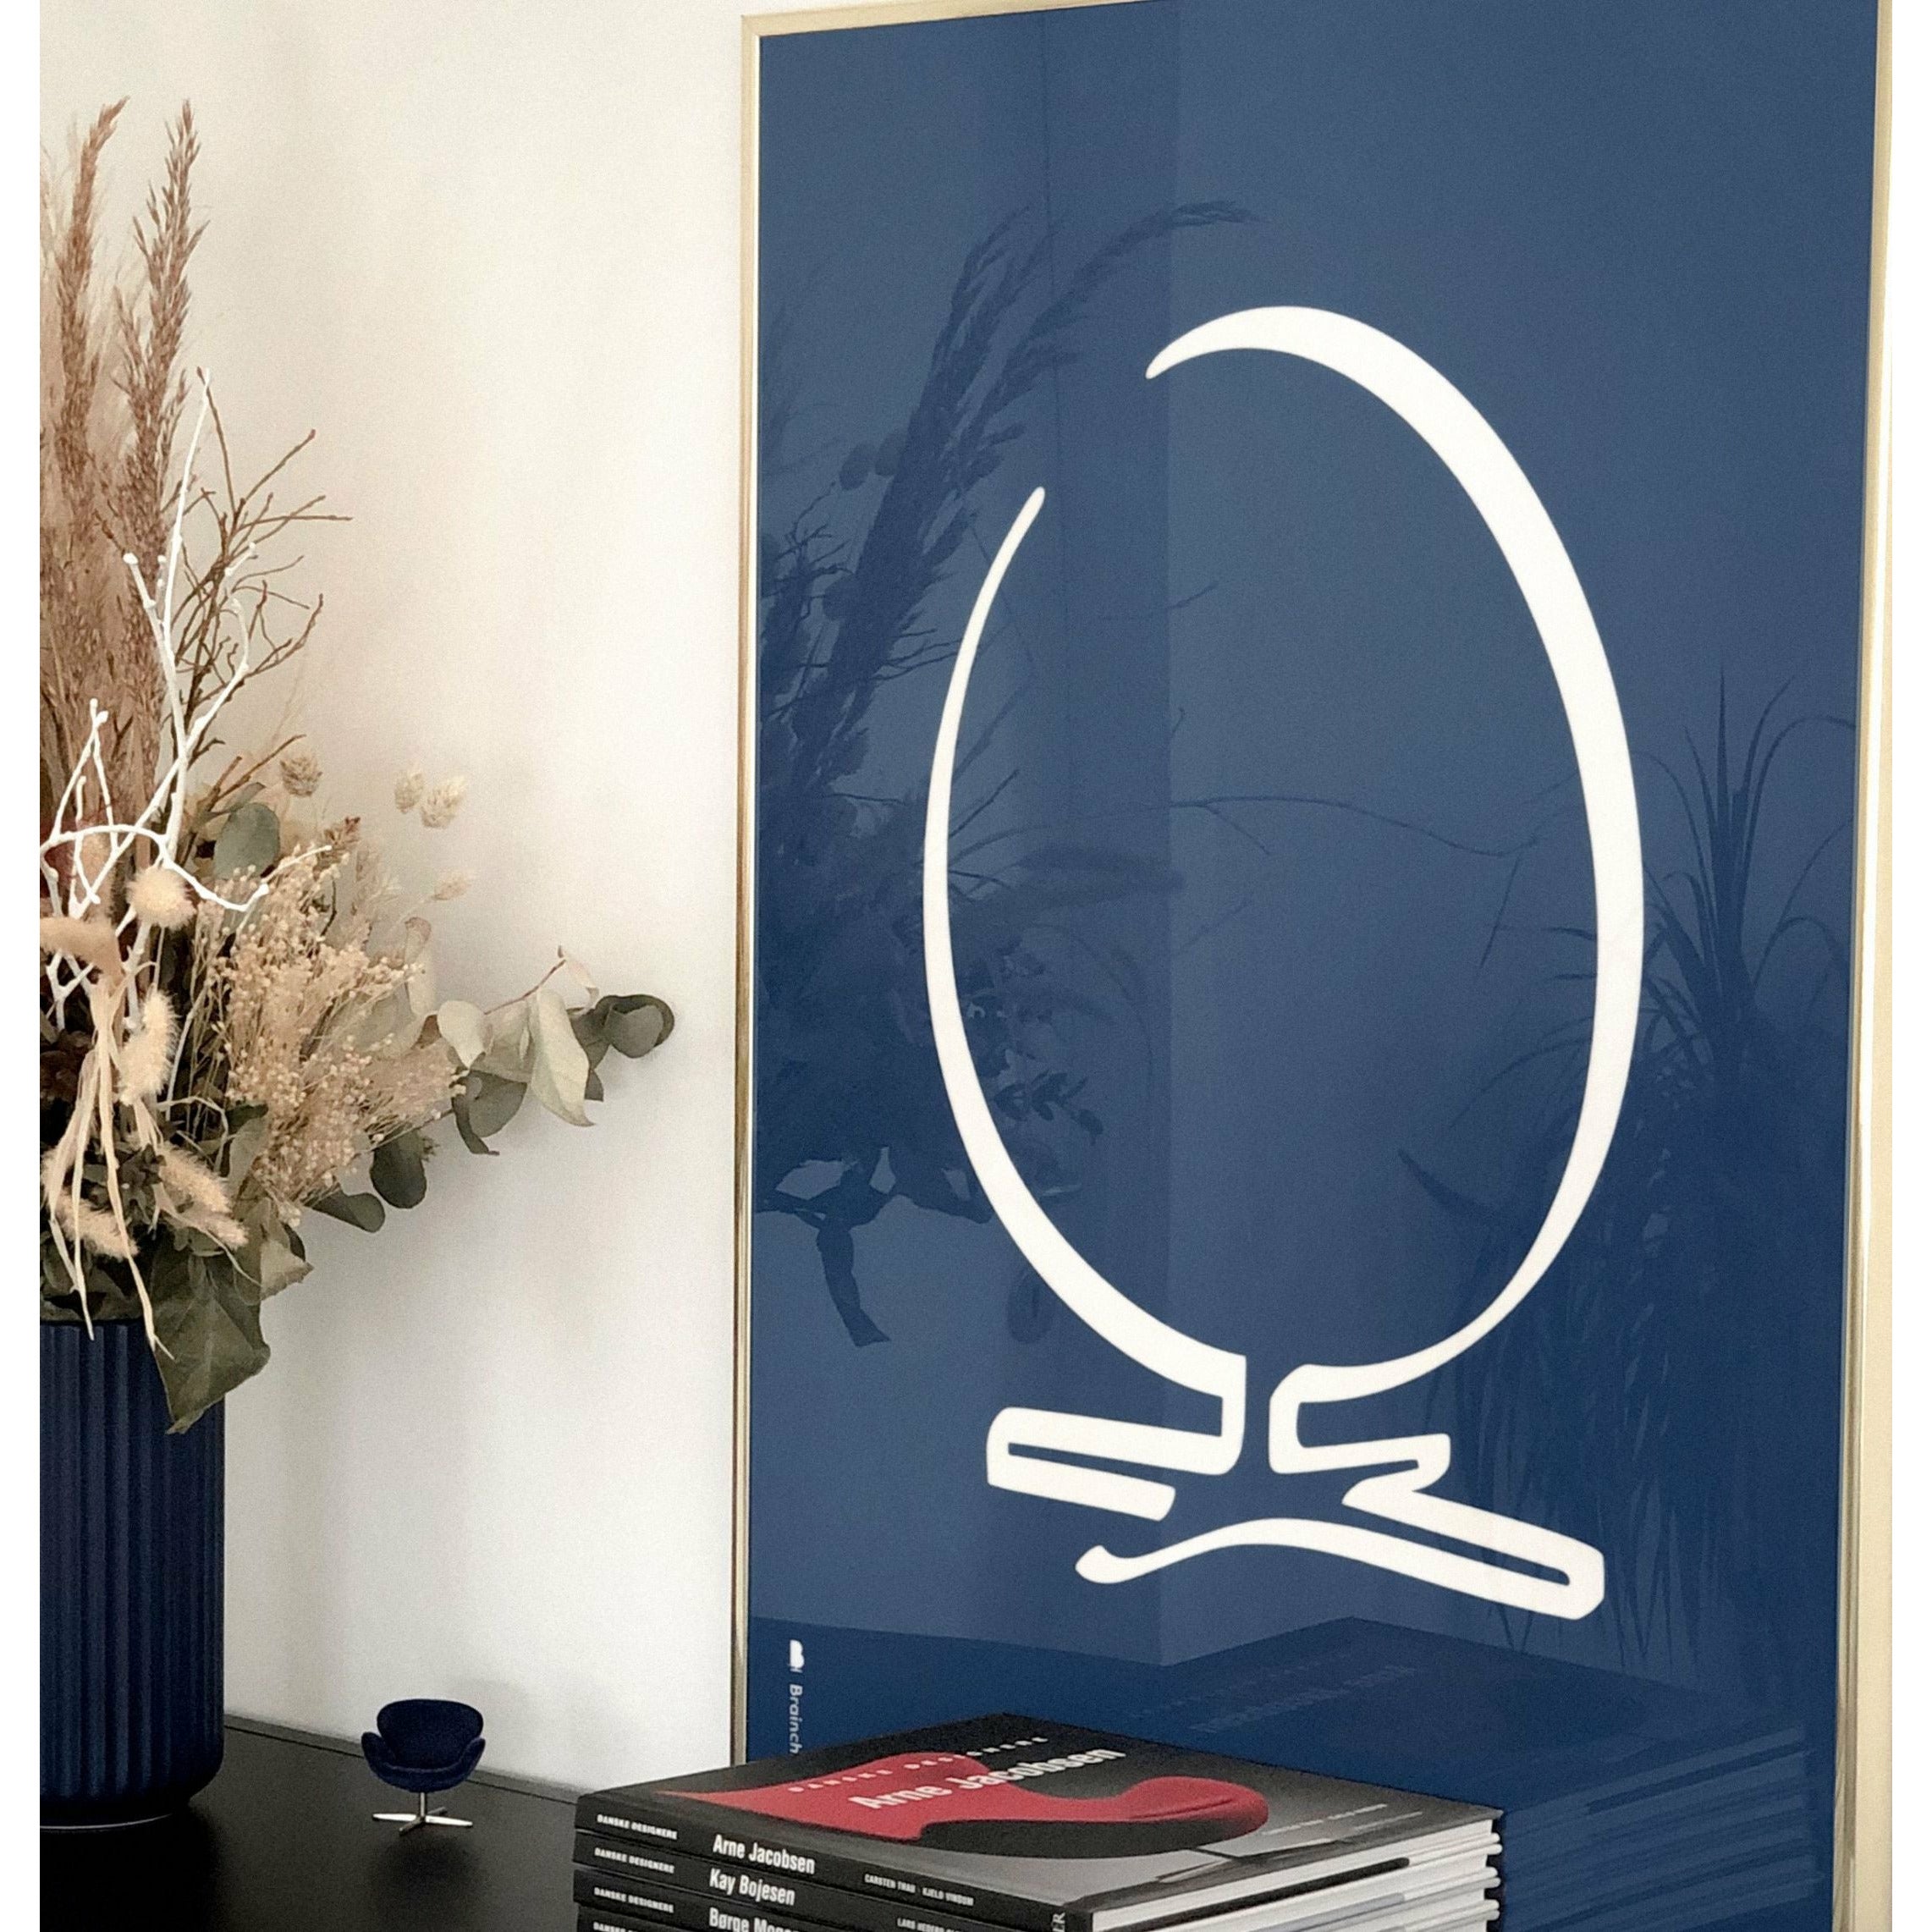 Brainchild Egg Line Poster, Frame Made Of Light Wood A5, Blue Background